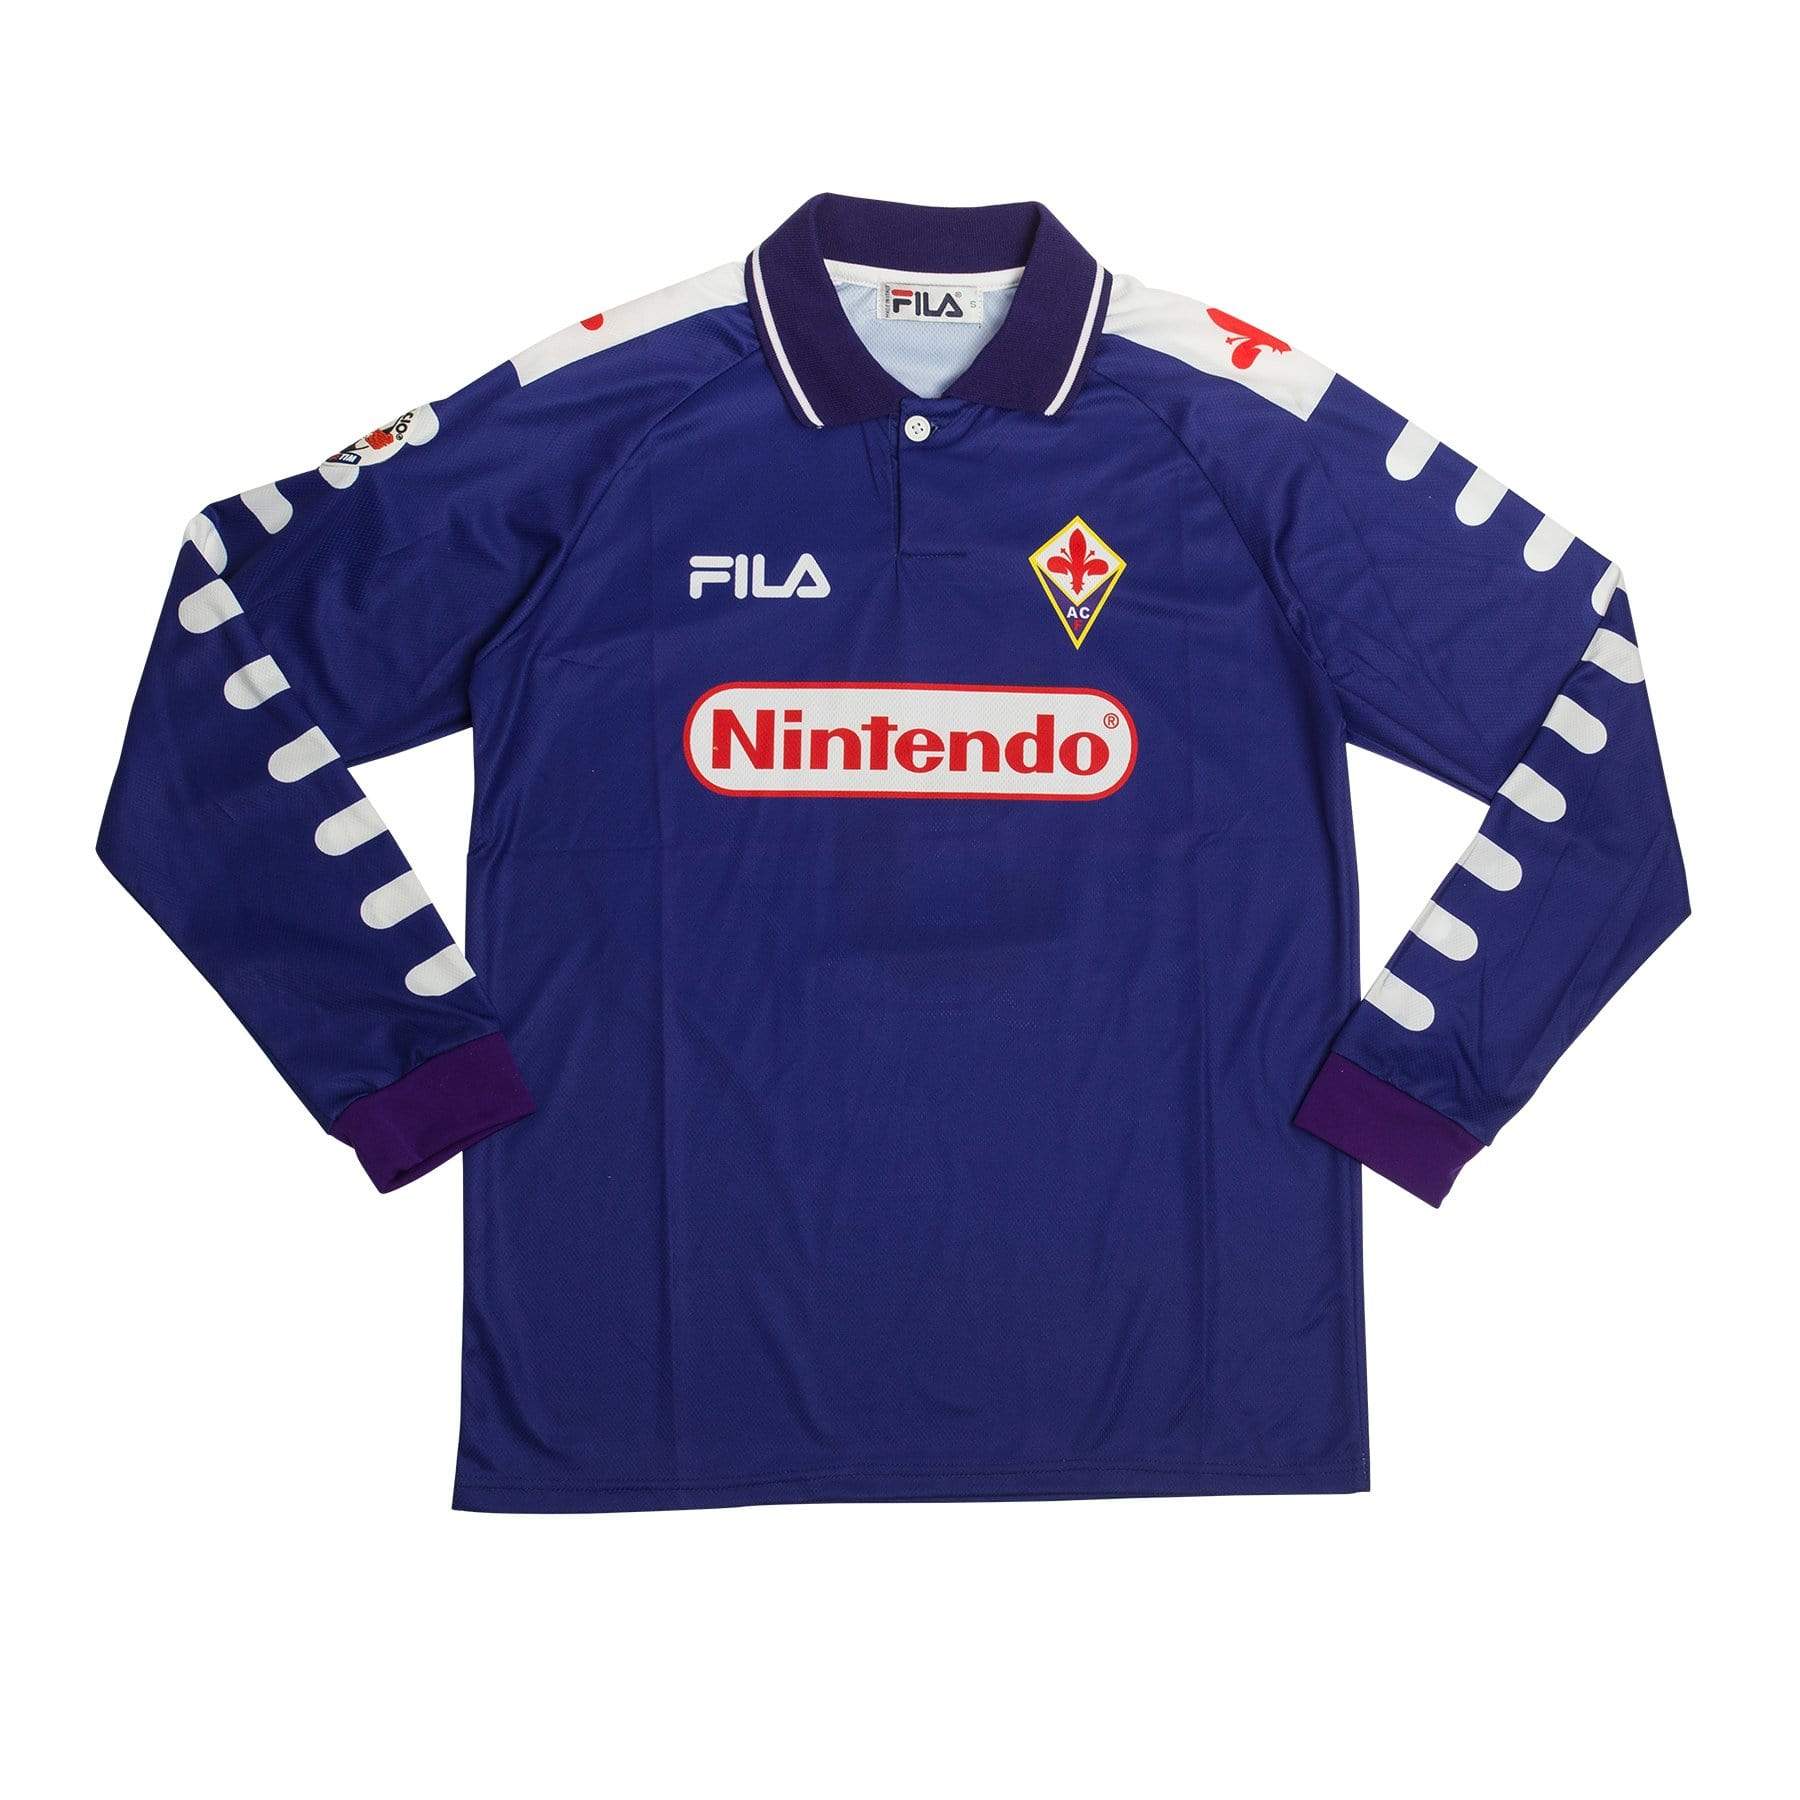 1998-99 Fiorentina home football shirt S #9 Batistuta - Football Shirt Collective